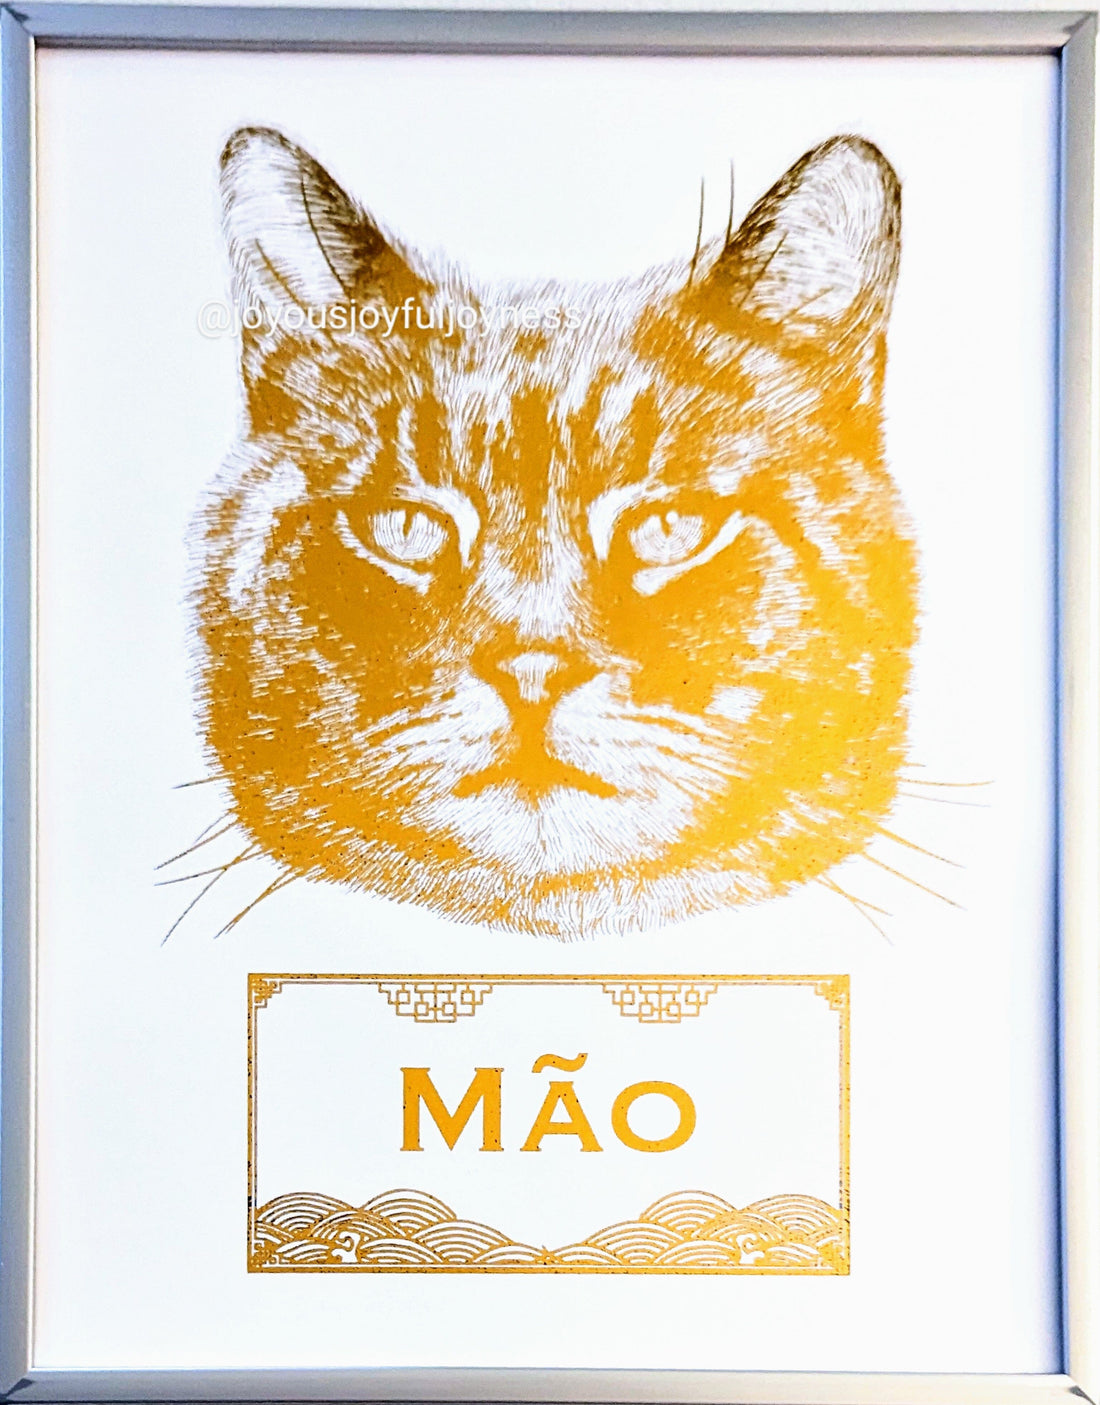 Enjoy Your Vietnamese Zodiac Animal Print Art Today